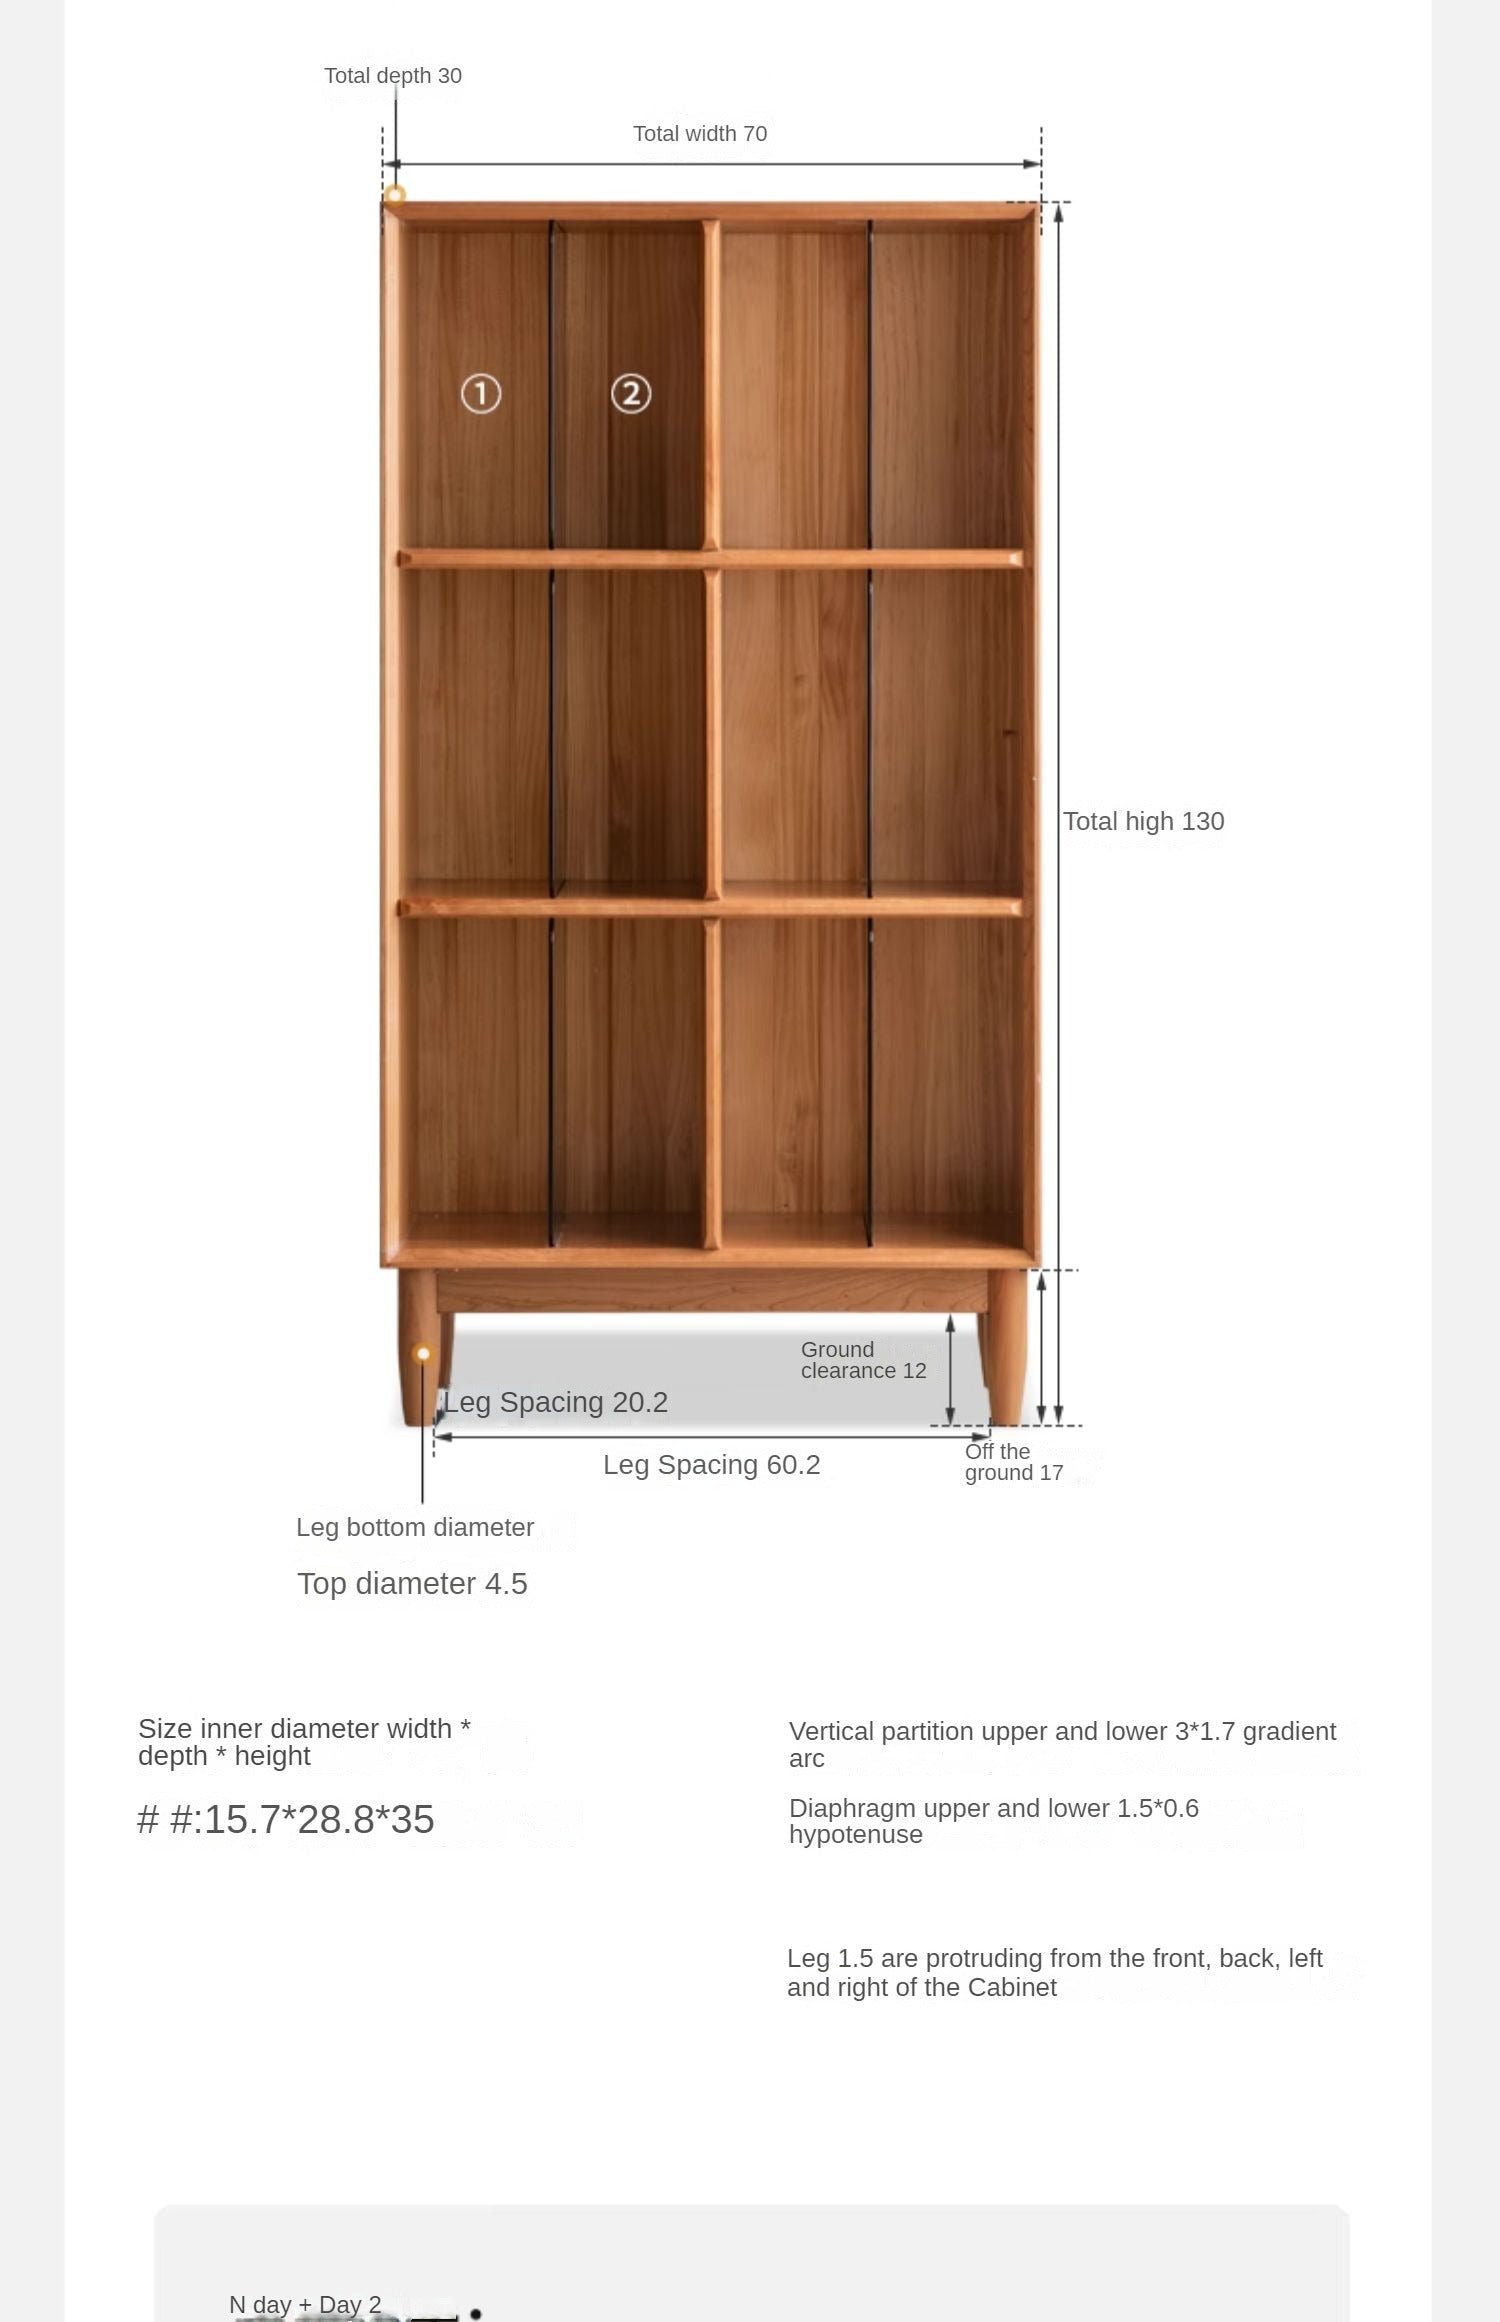 Cherry solid wood Bookshelf lattice cabinet -